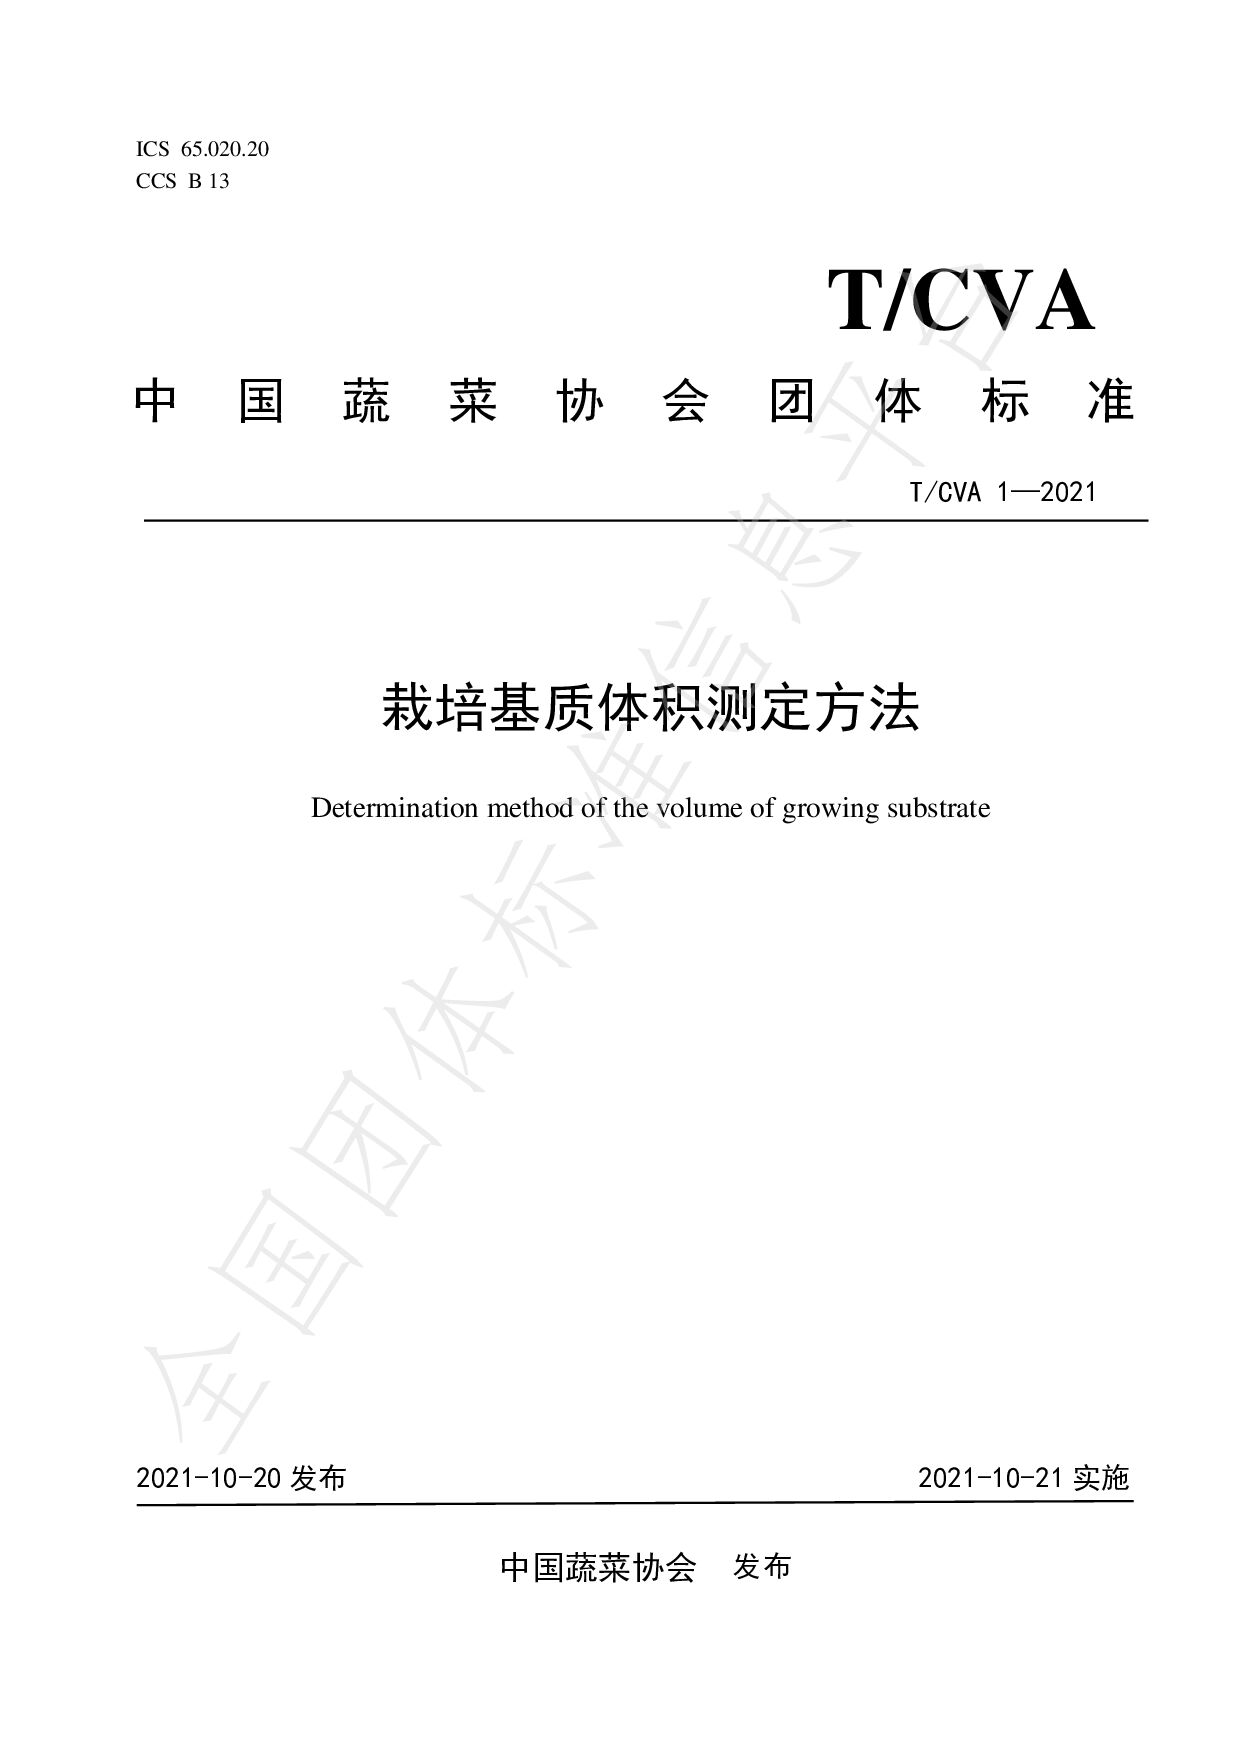 T/CVA 1-2021